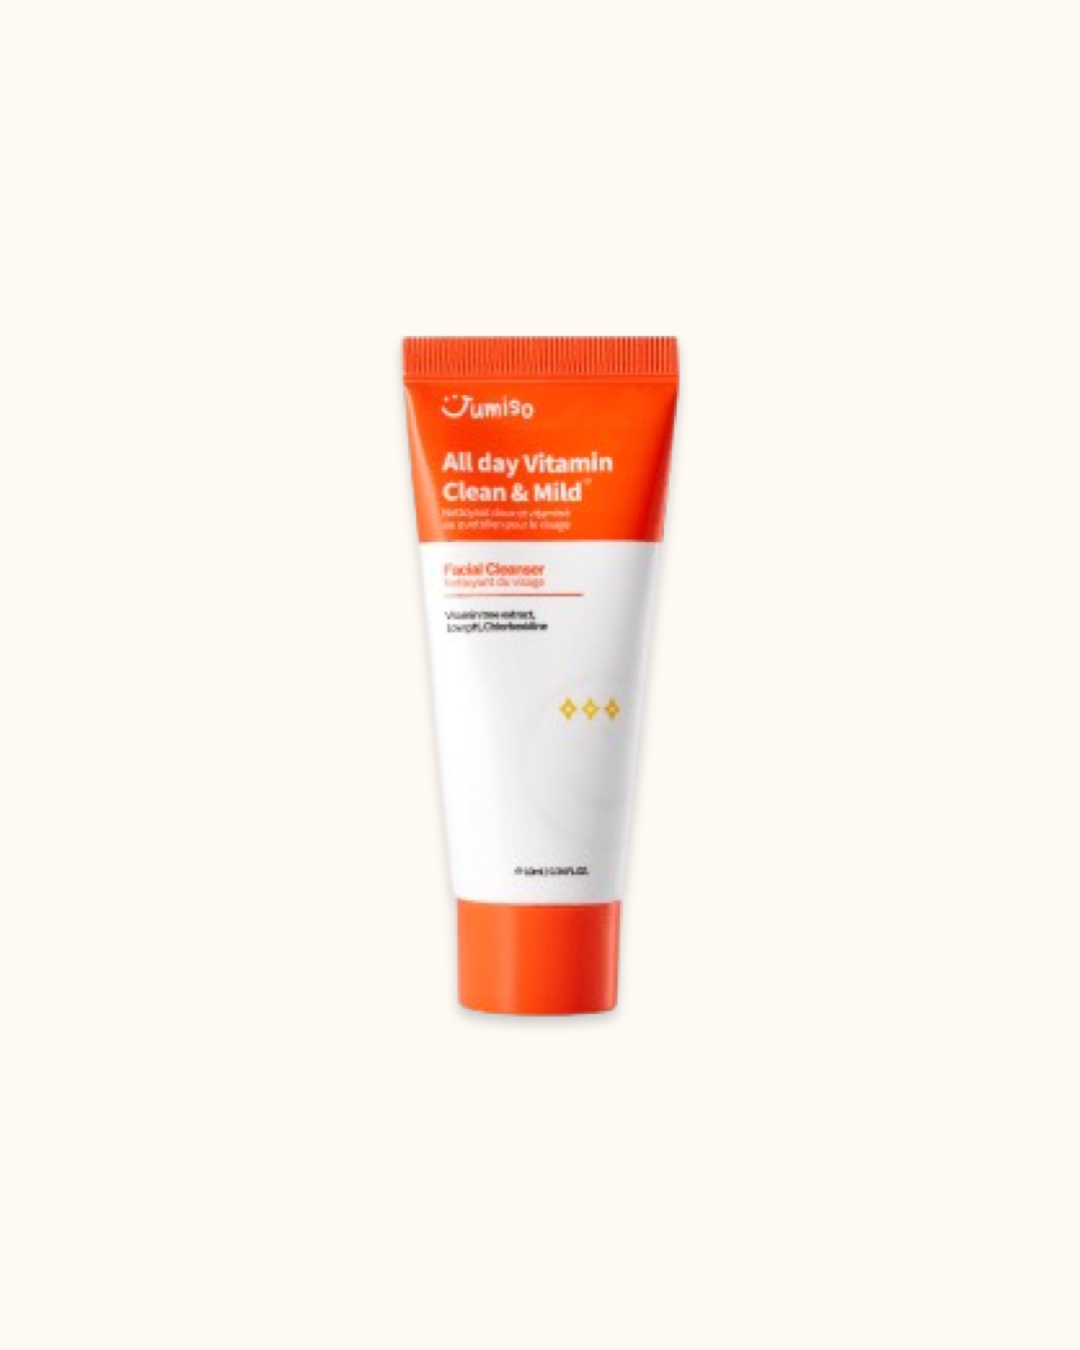 [CLEARANCE] [Mini] All day Vitamin Clean & Mild Facial Cleanser 10ml [Exp. Aug. 26, 2023]